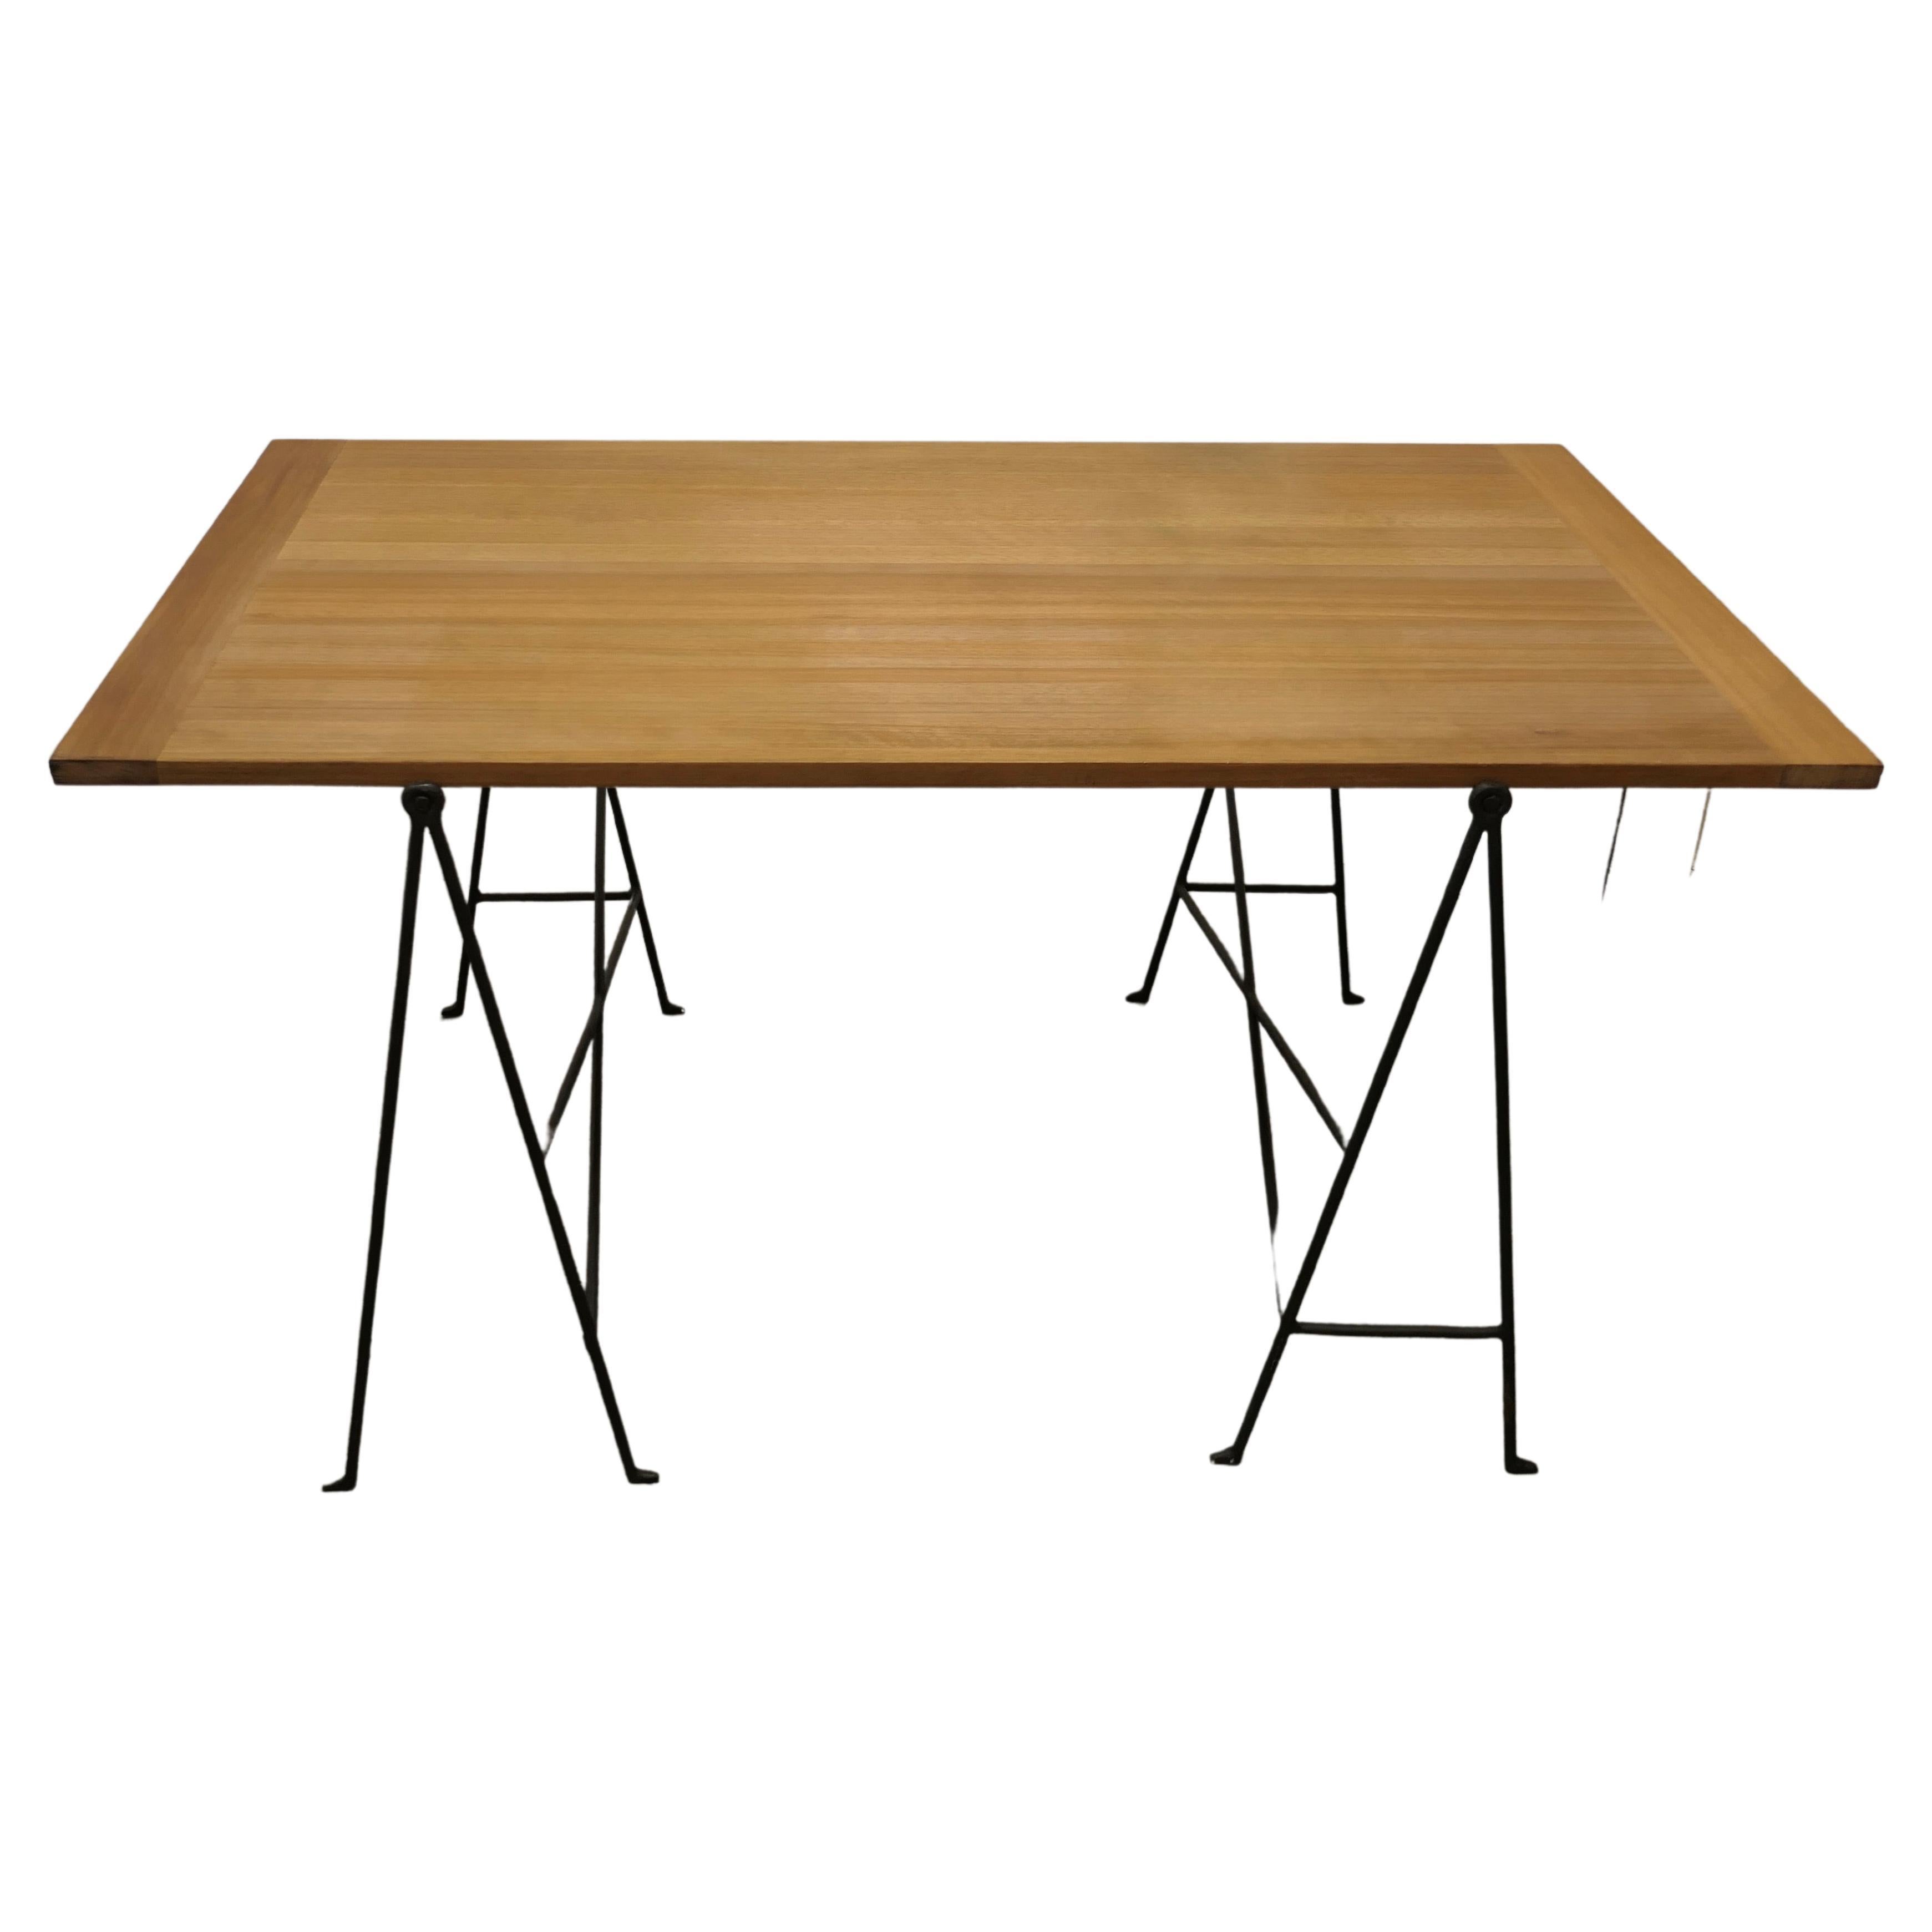 1950s, Scandinavian Minimalist Sawhorse Desk or Table  For Sale